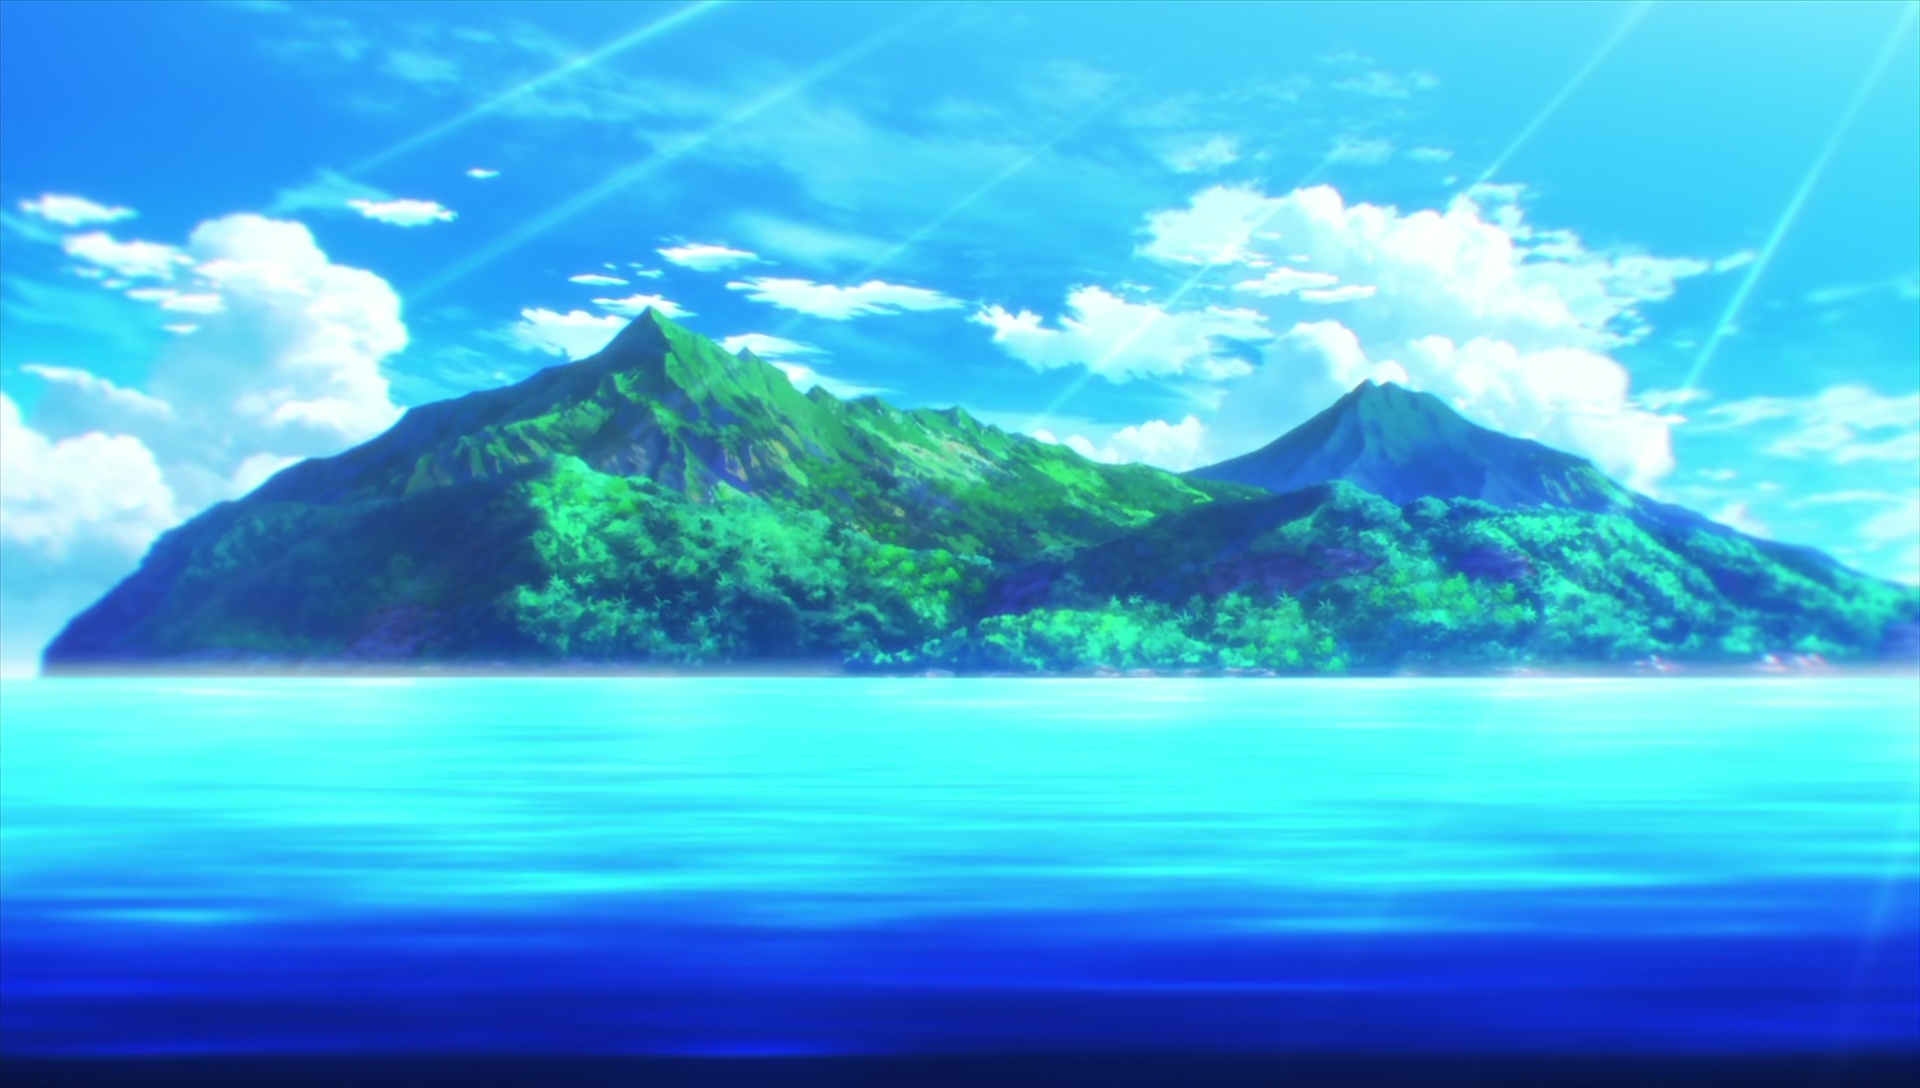 Deserted Island Anime Results : r/ClassroomOfTheElite